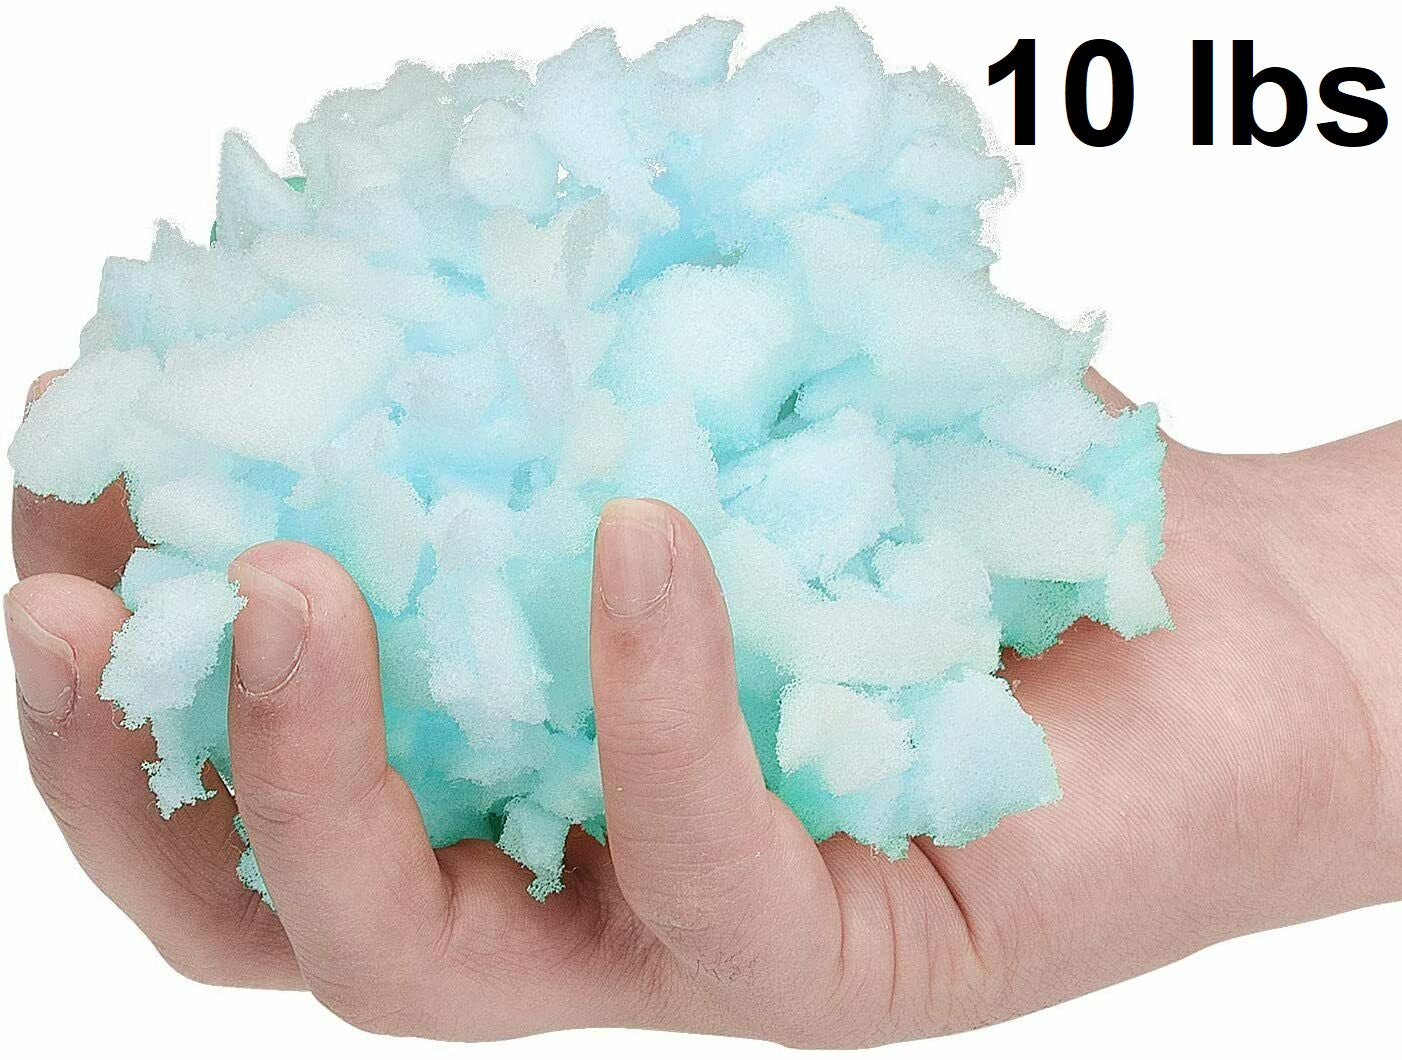 Shredded Foam - 10 pounds